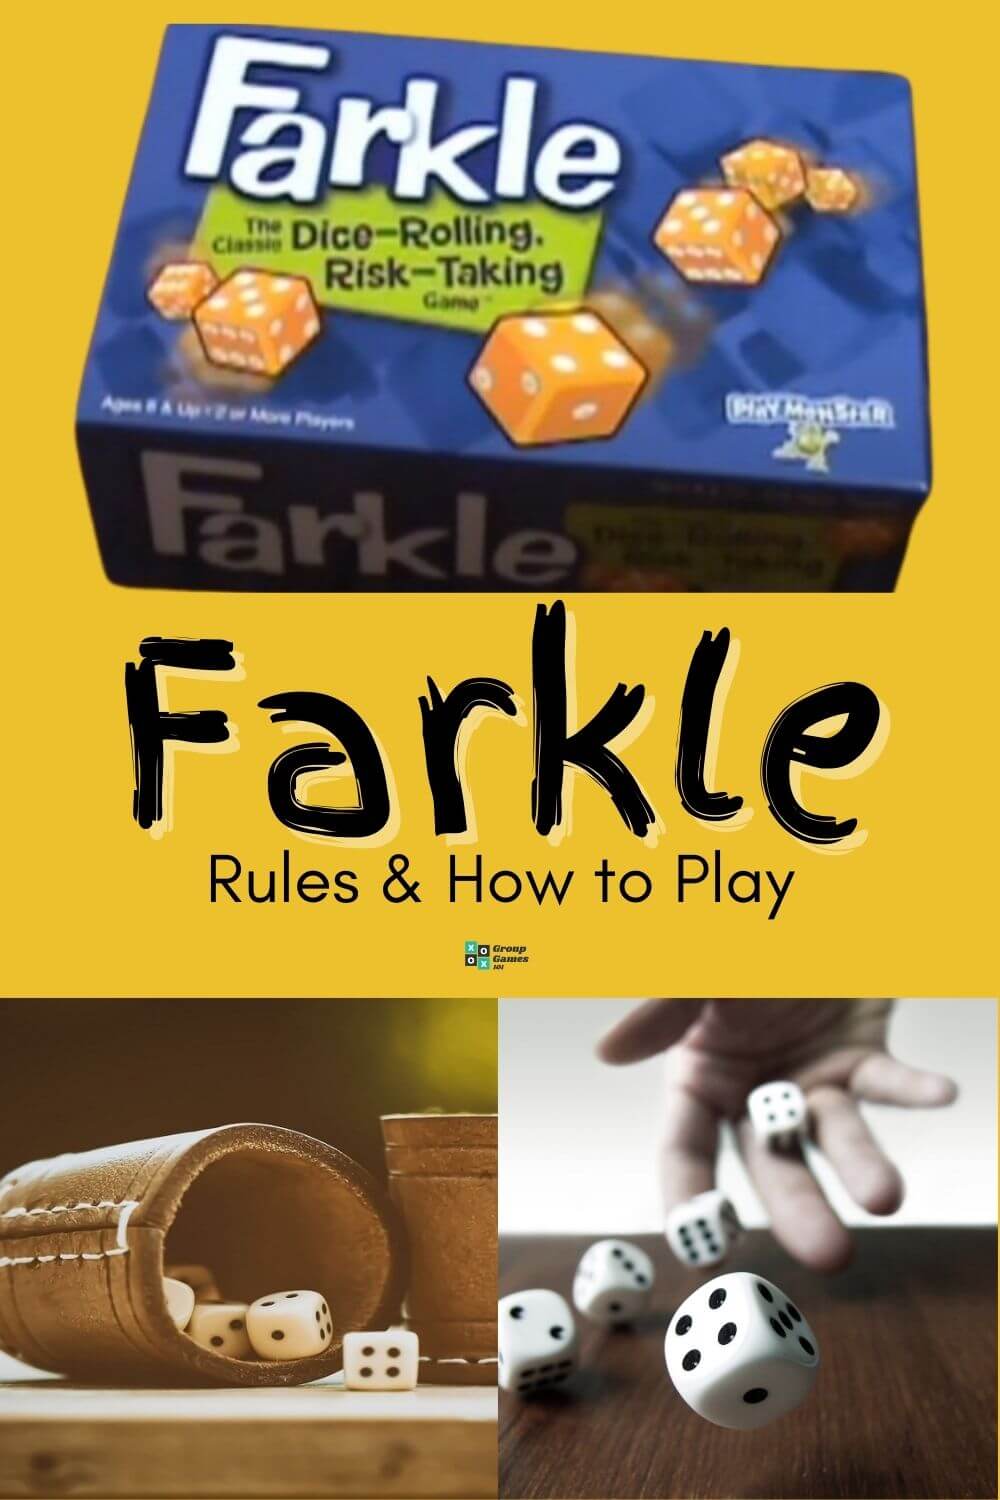 farkle scoring rules